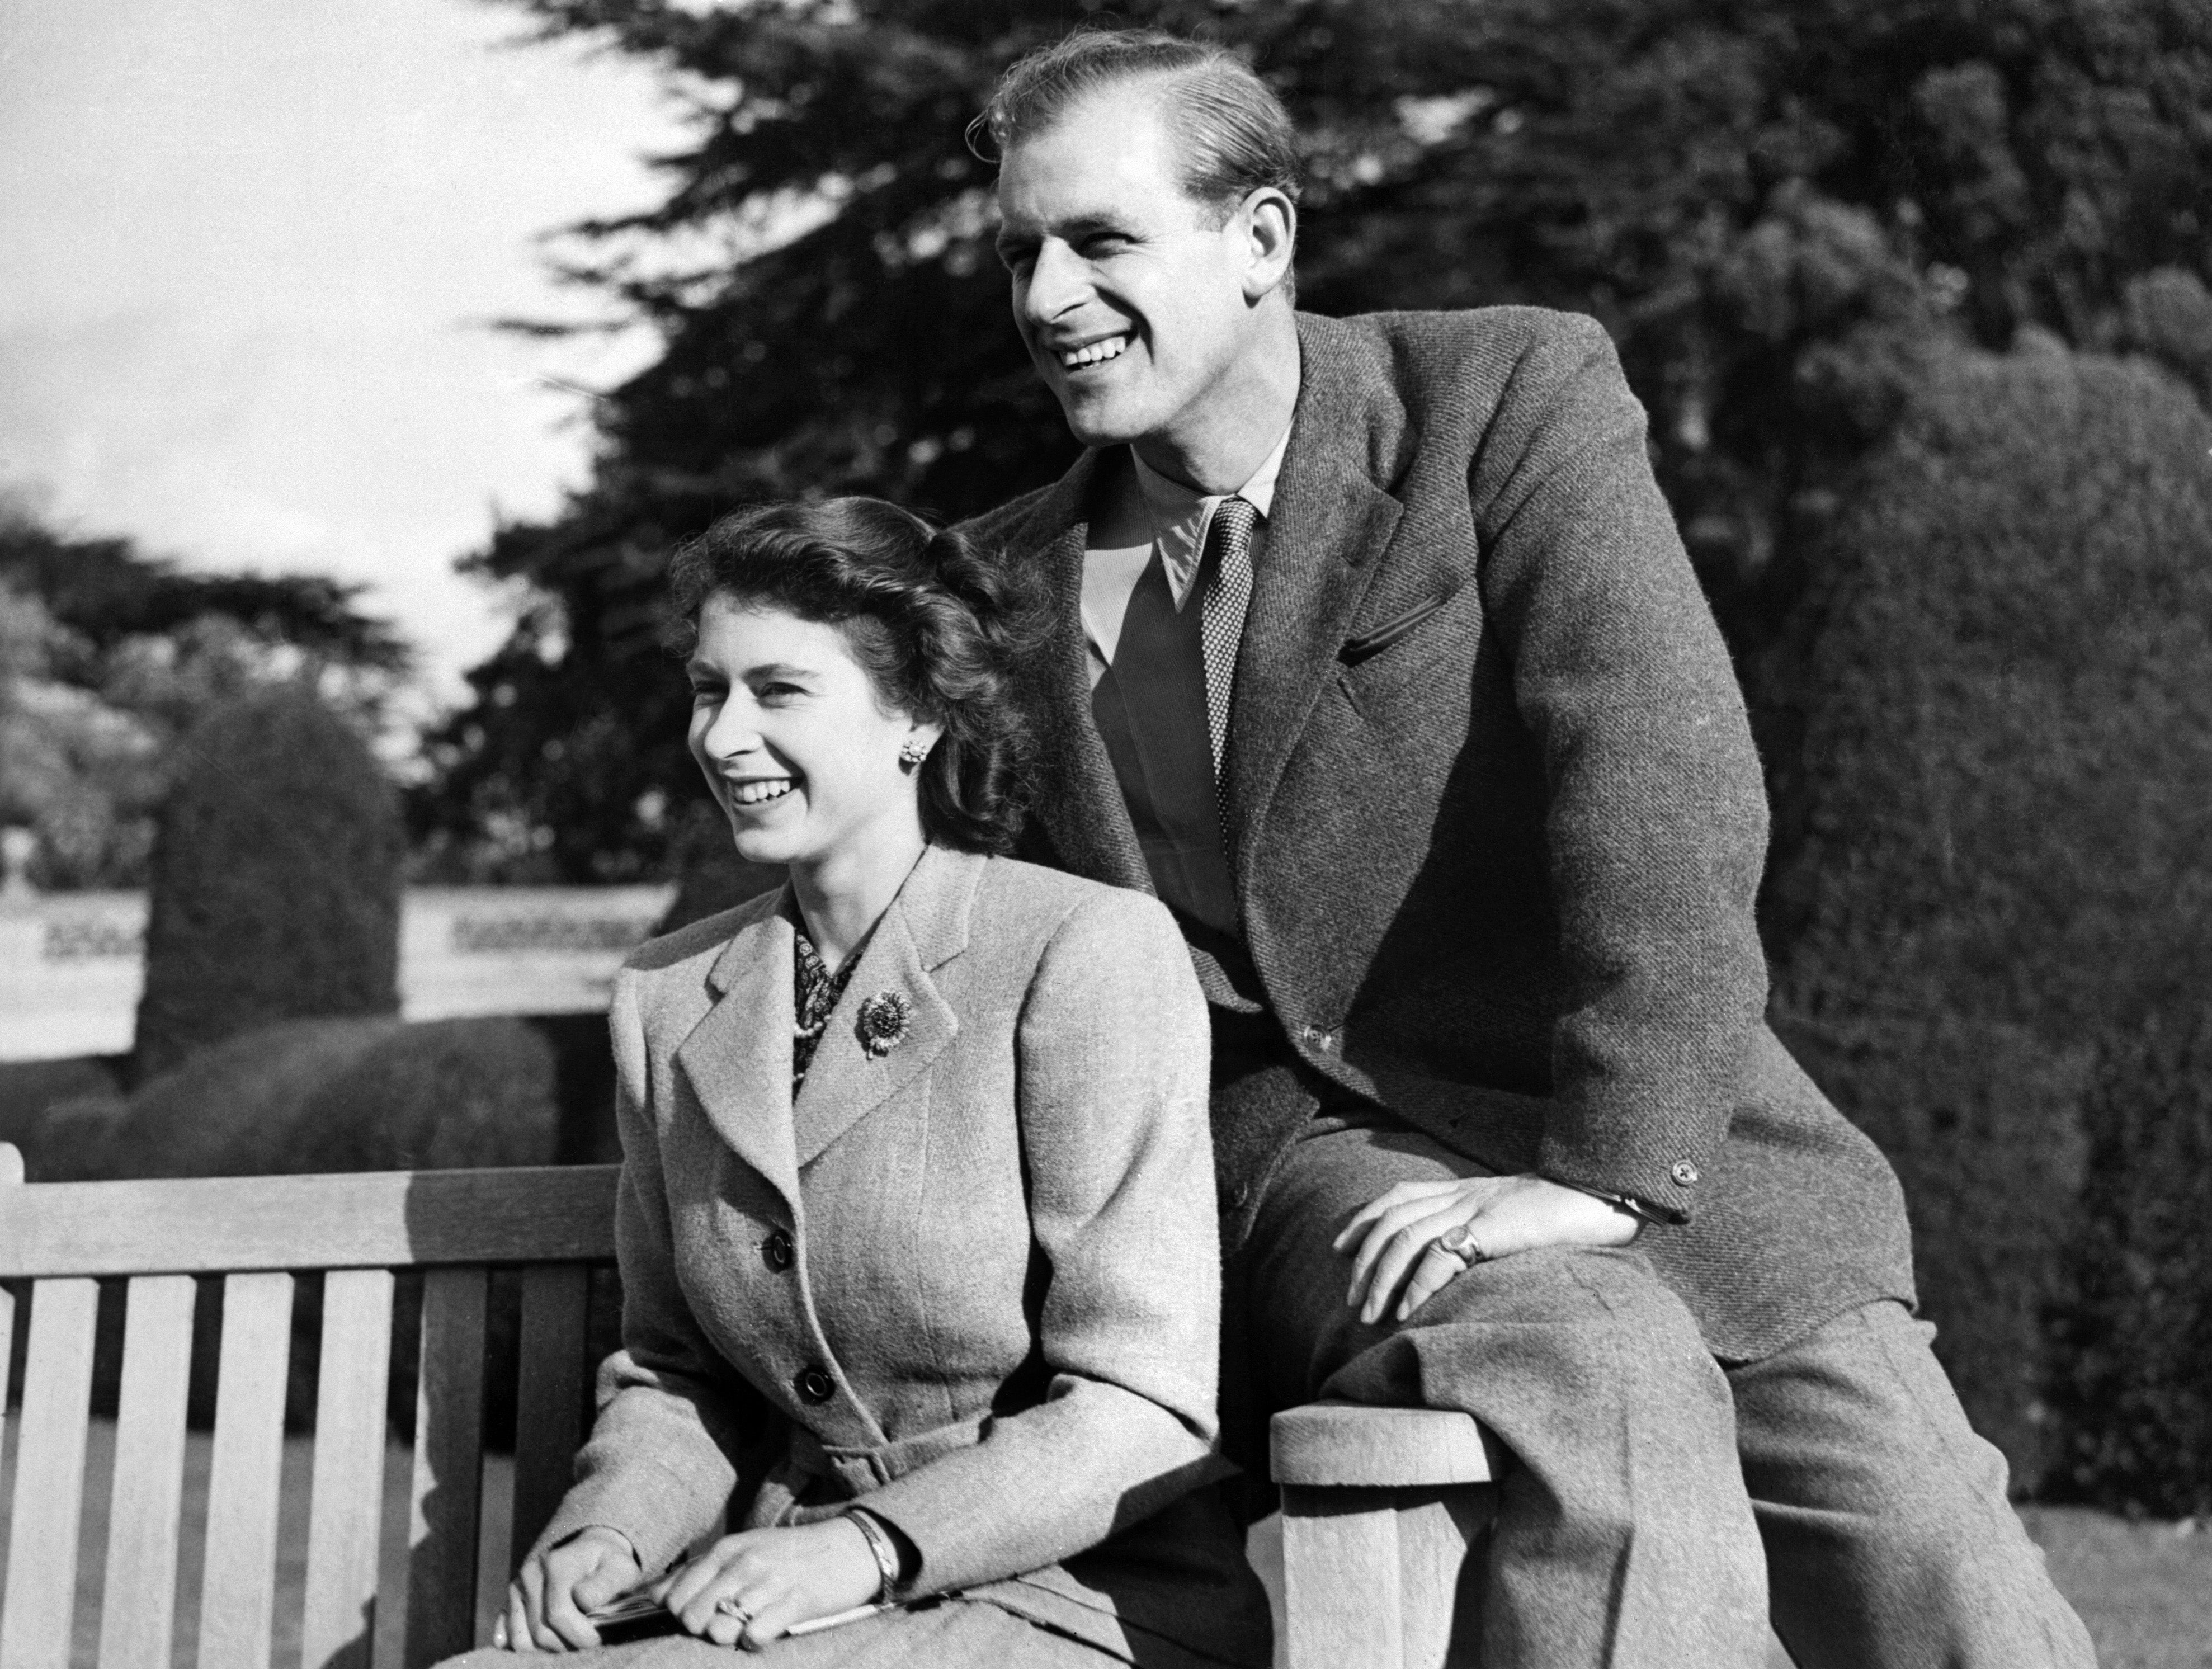 Posing during their honeymoon in 1947 on Broadlands estate, Hampshire